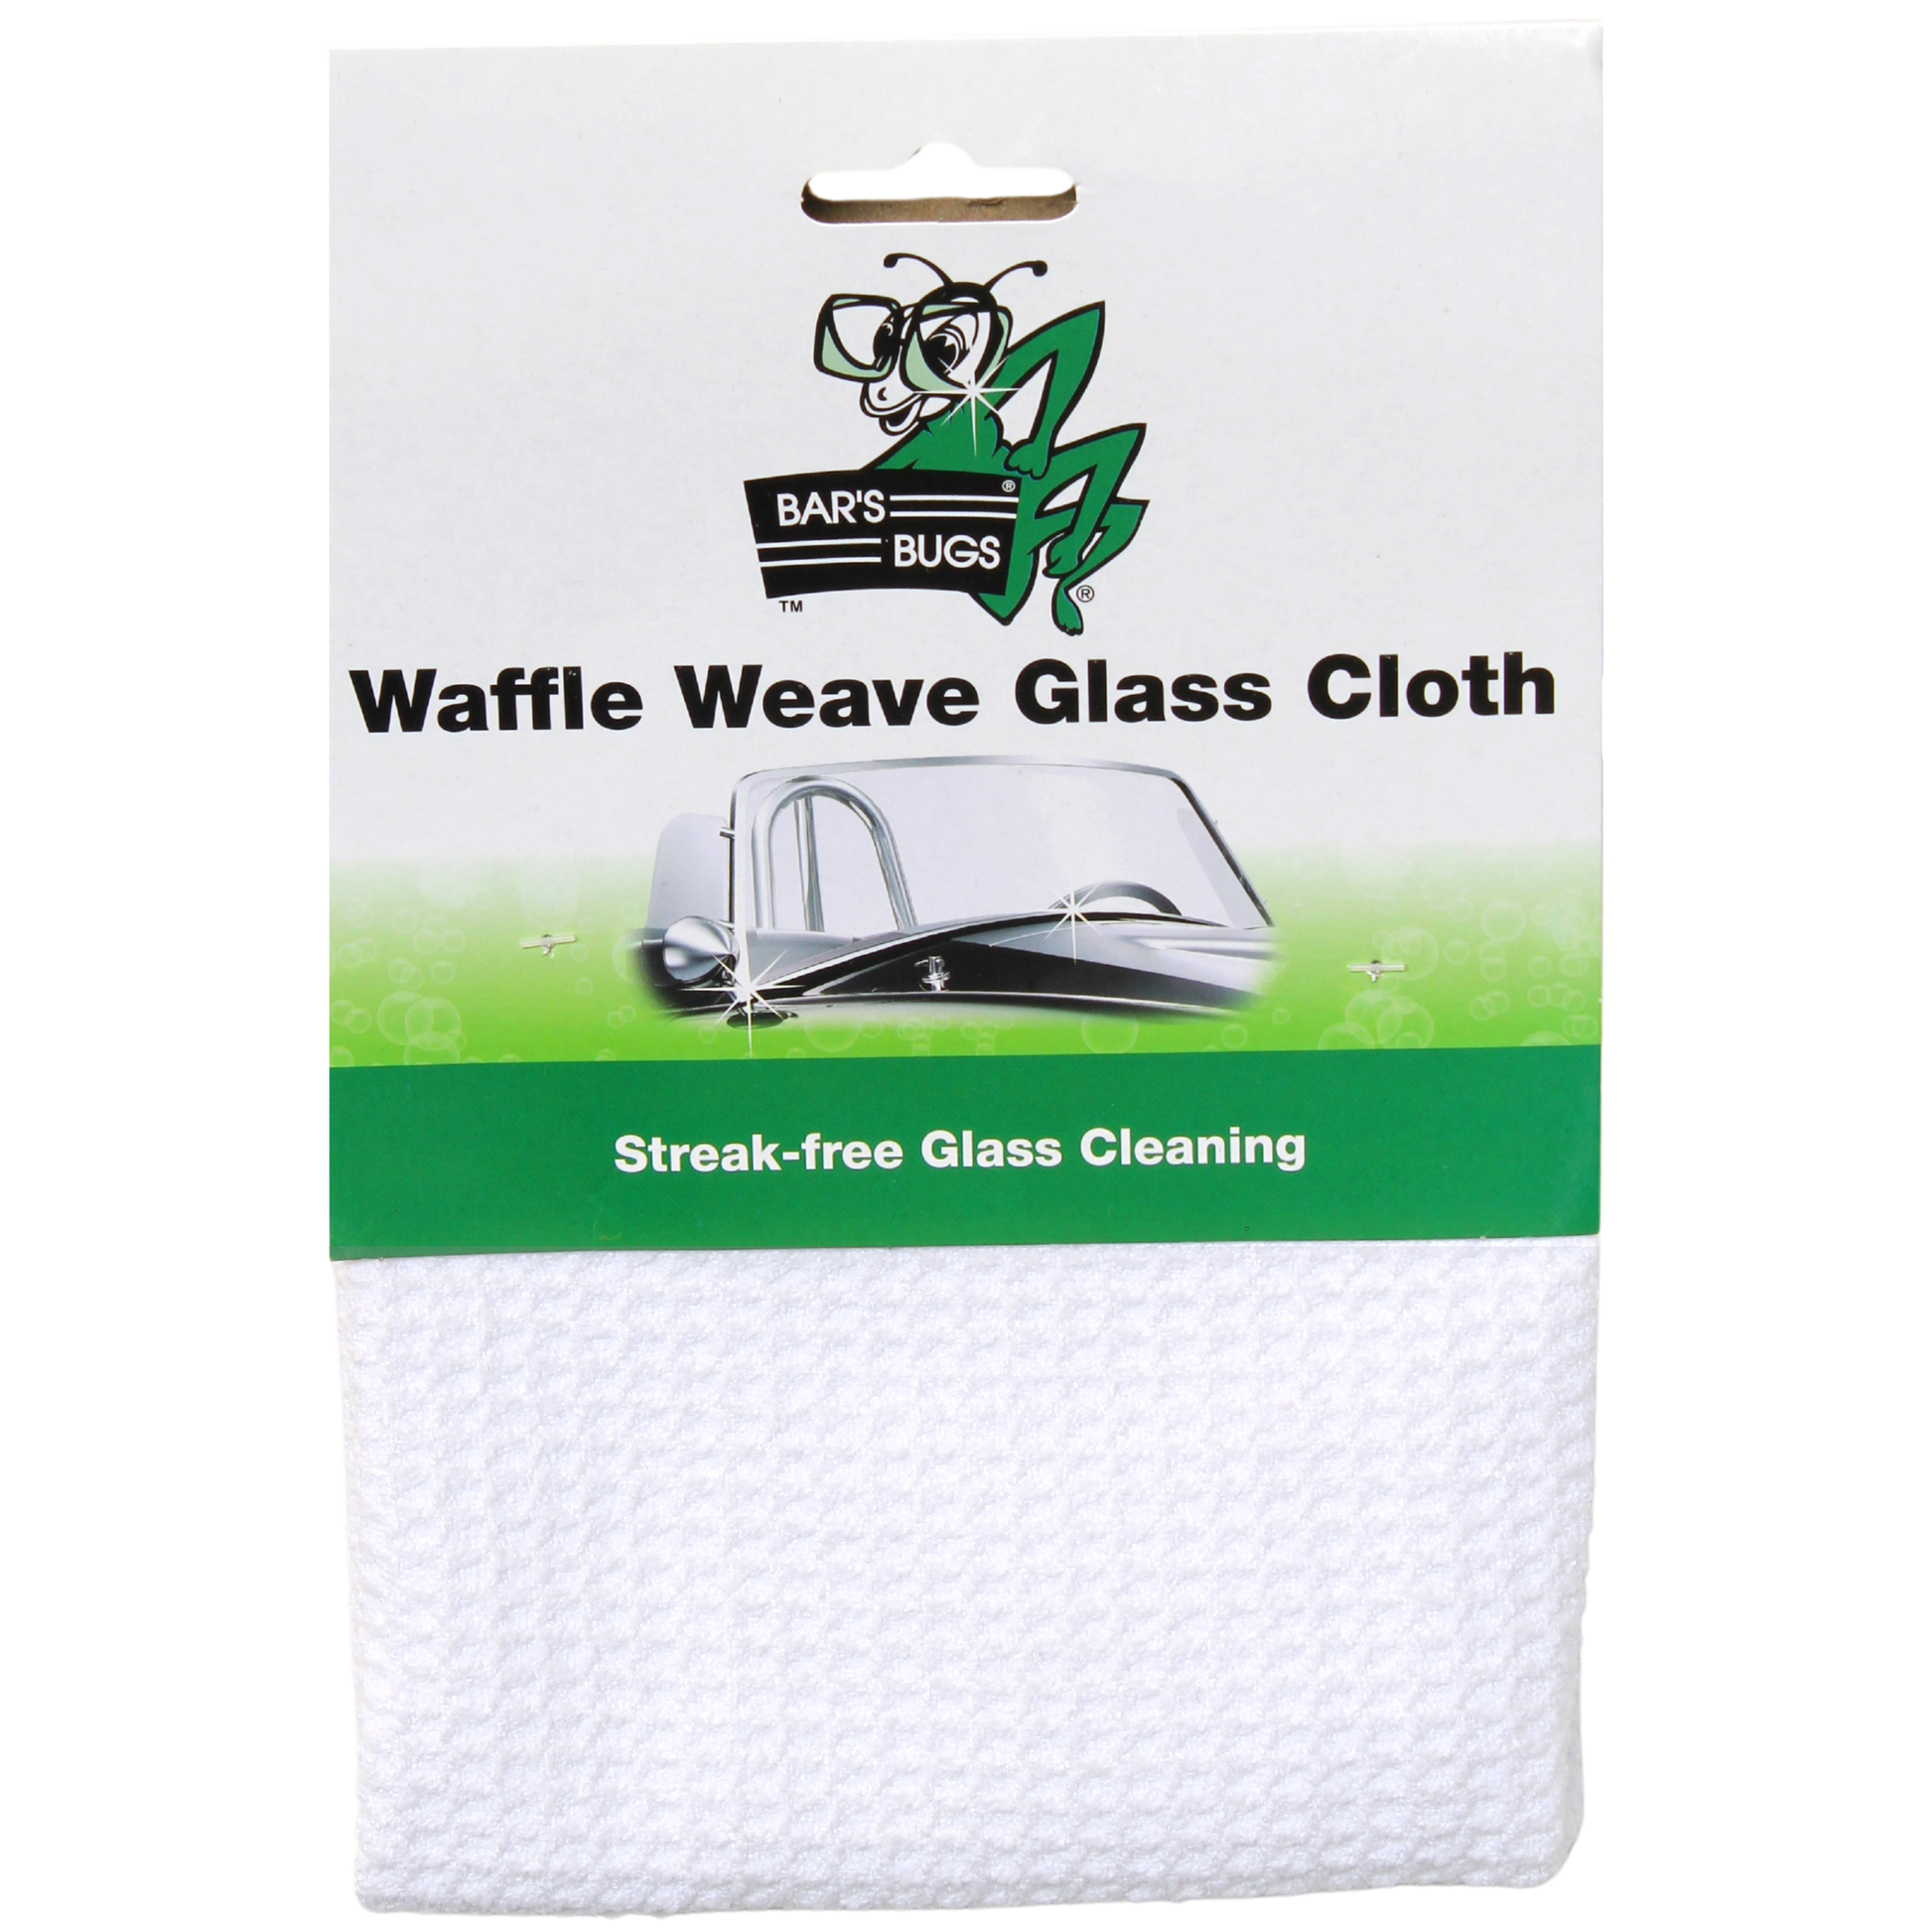 Bar's Bugs Waffle Weave Glass Cloth